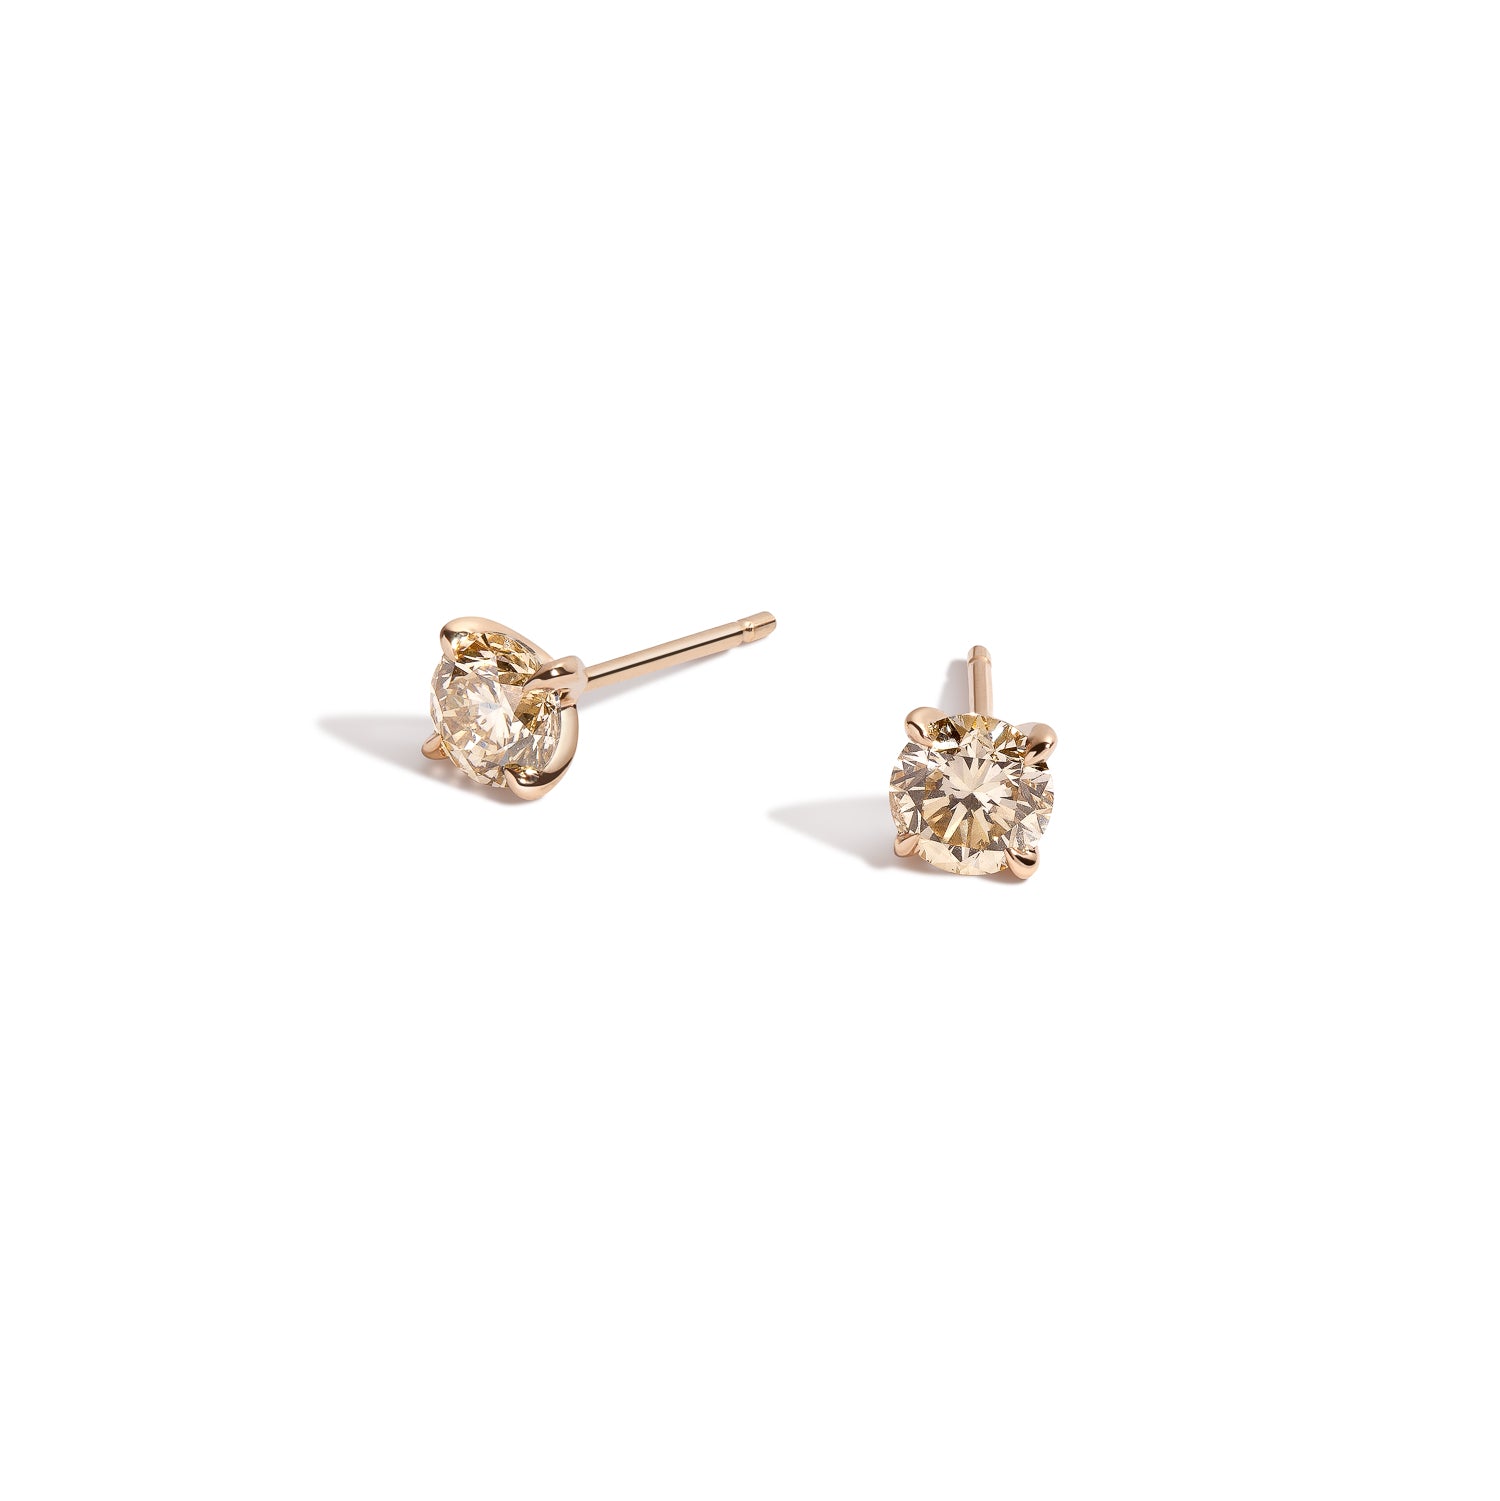 Shahla Karimi Champagne Round Diamond Earring Studs 14K Yellow Gold